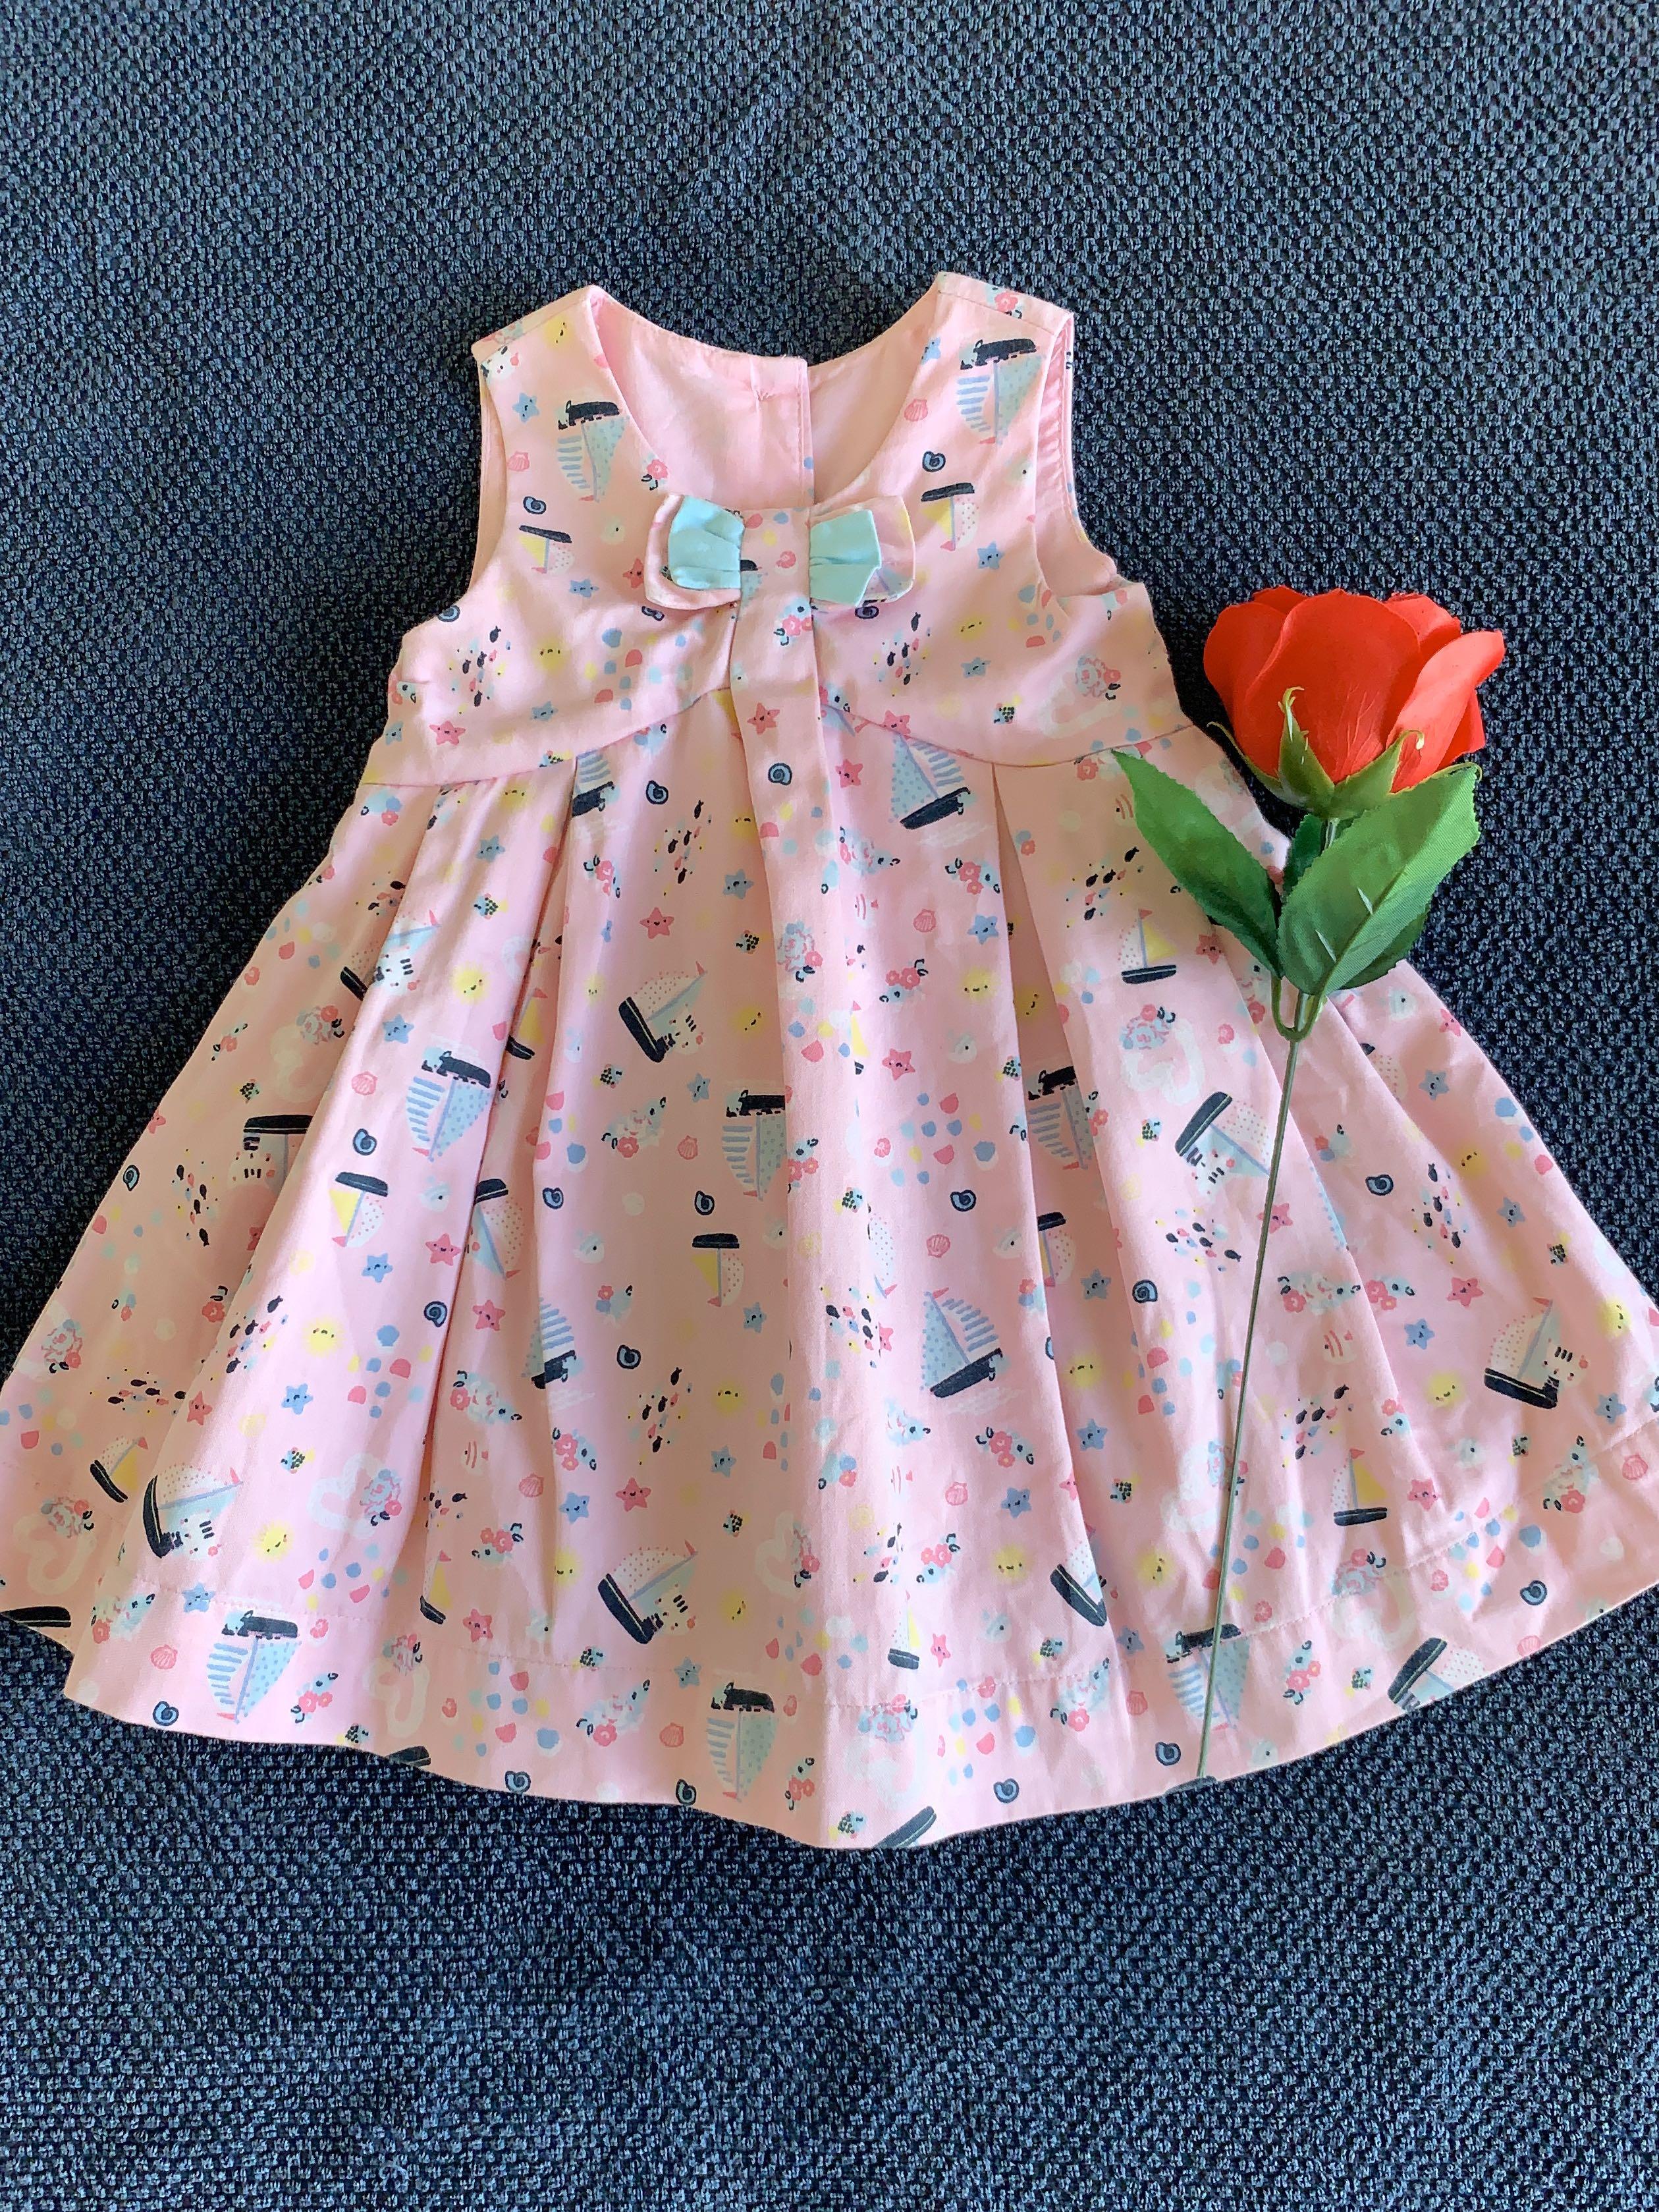 mothercare pink dress